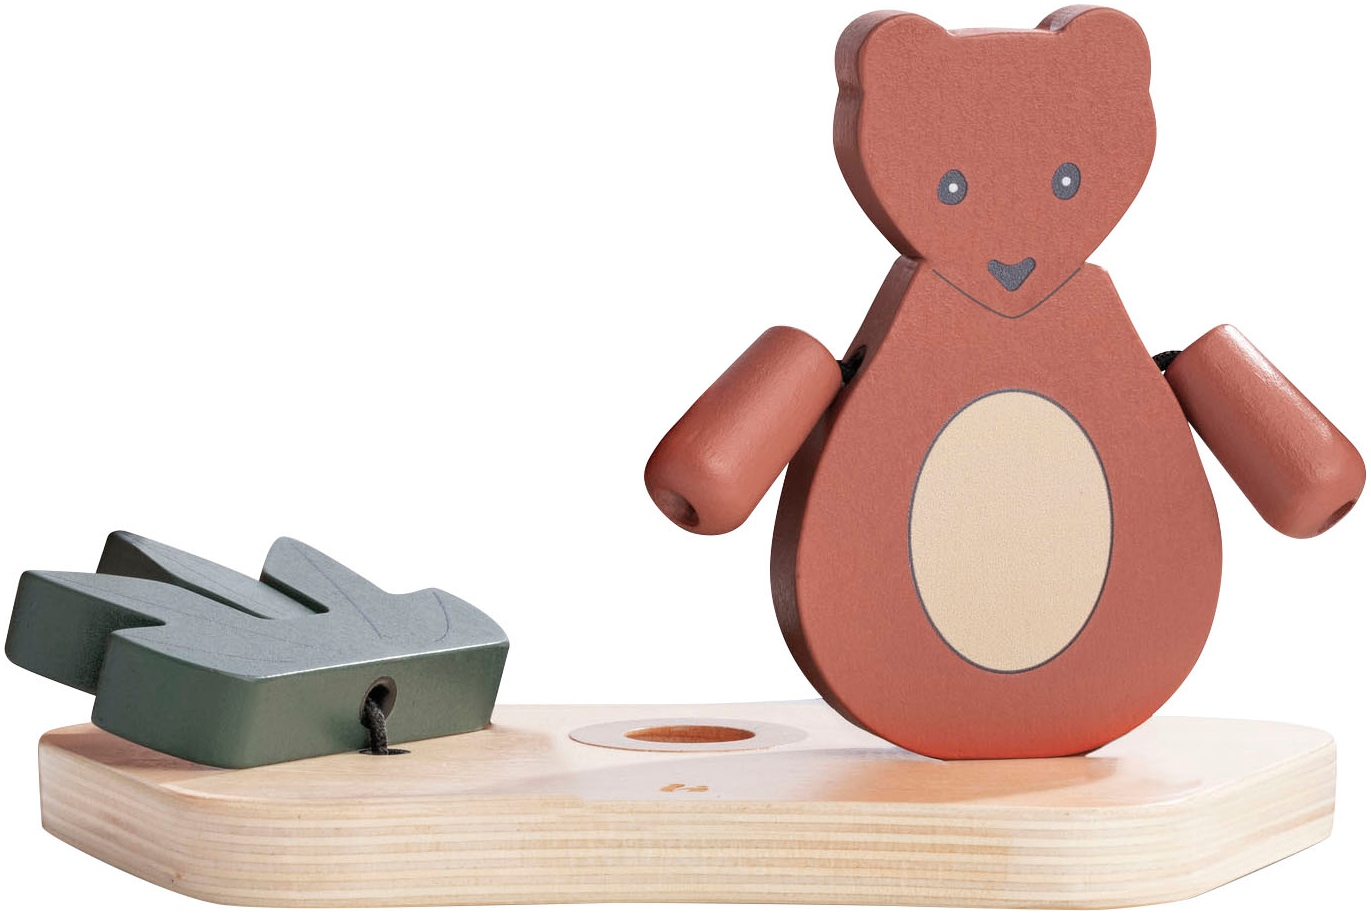 Hauck Greifspielzeug »Play Shaking S Bear«, FSC® - schützt Wald - weltweit